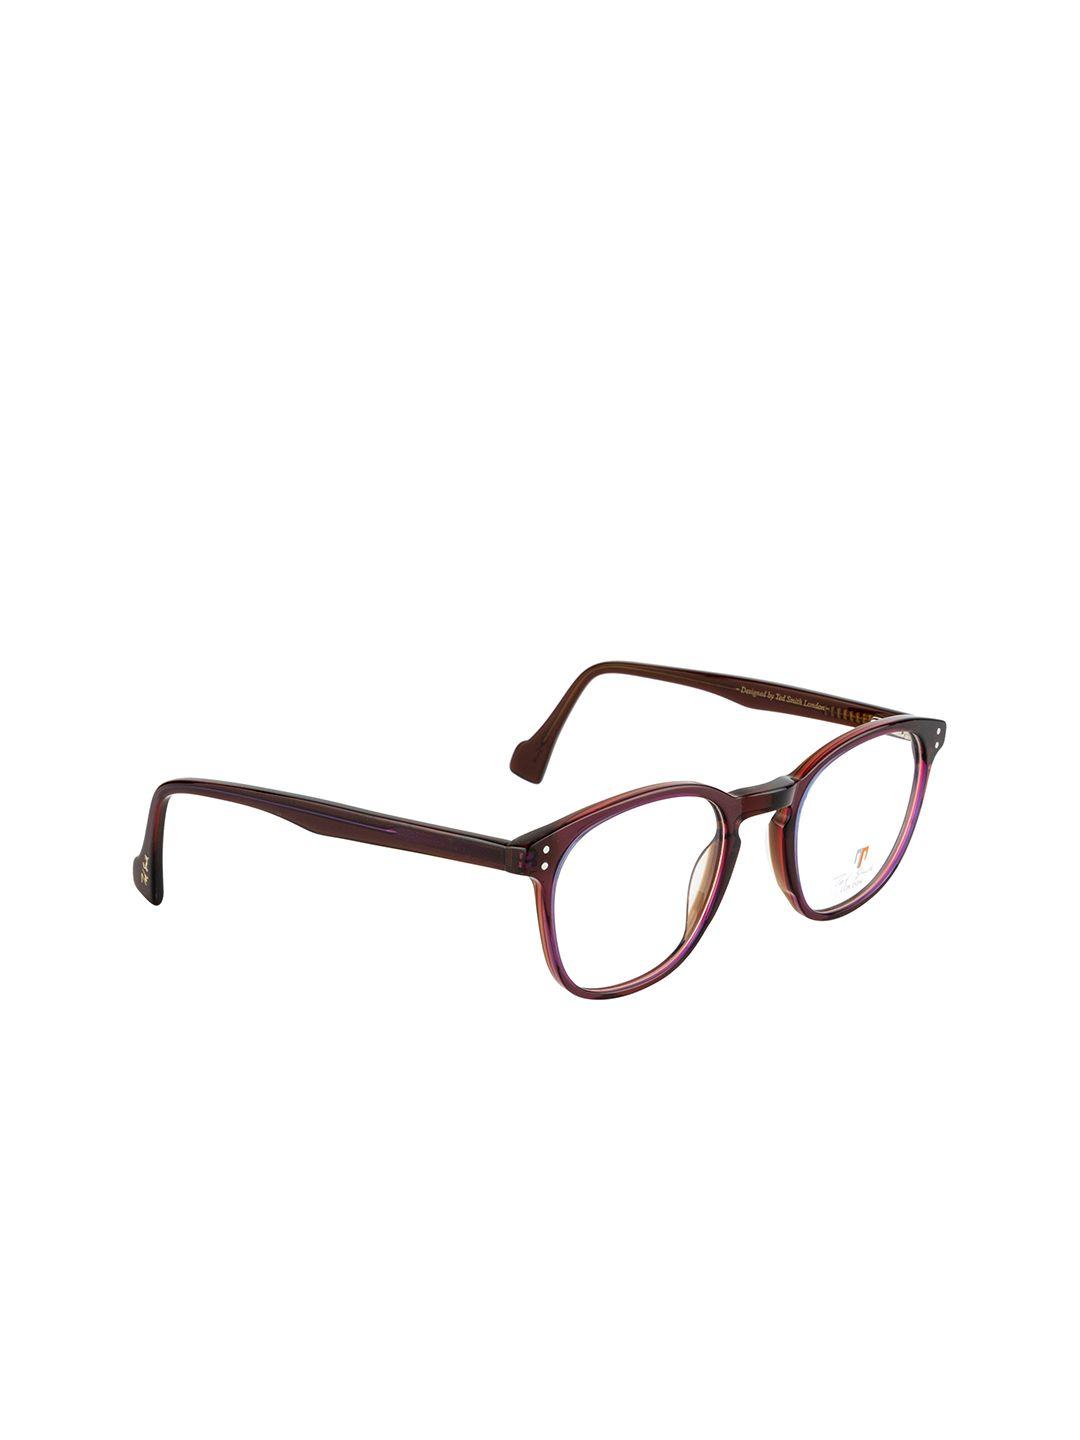 ted smith unisex purple full rim square frames eyeglasses